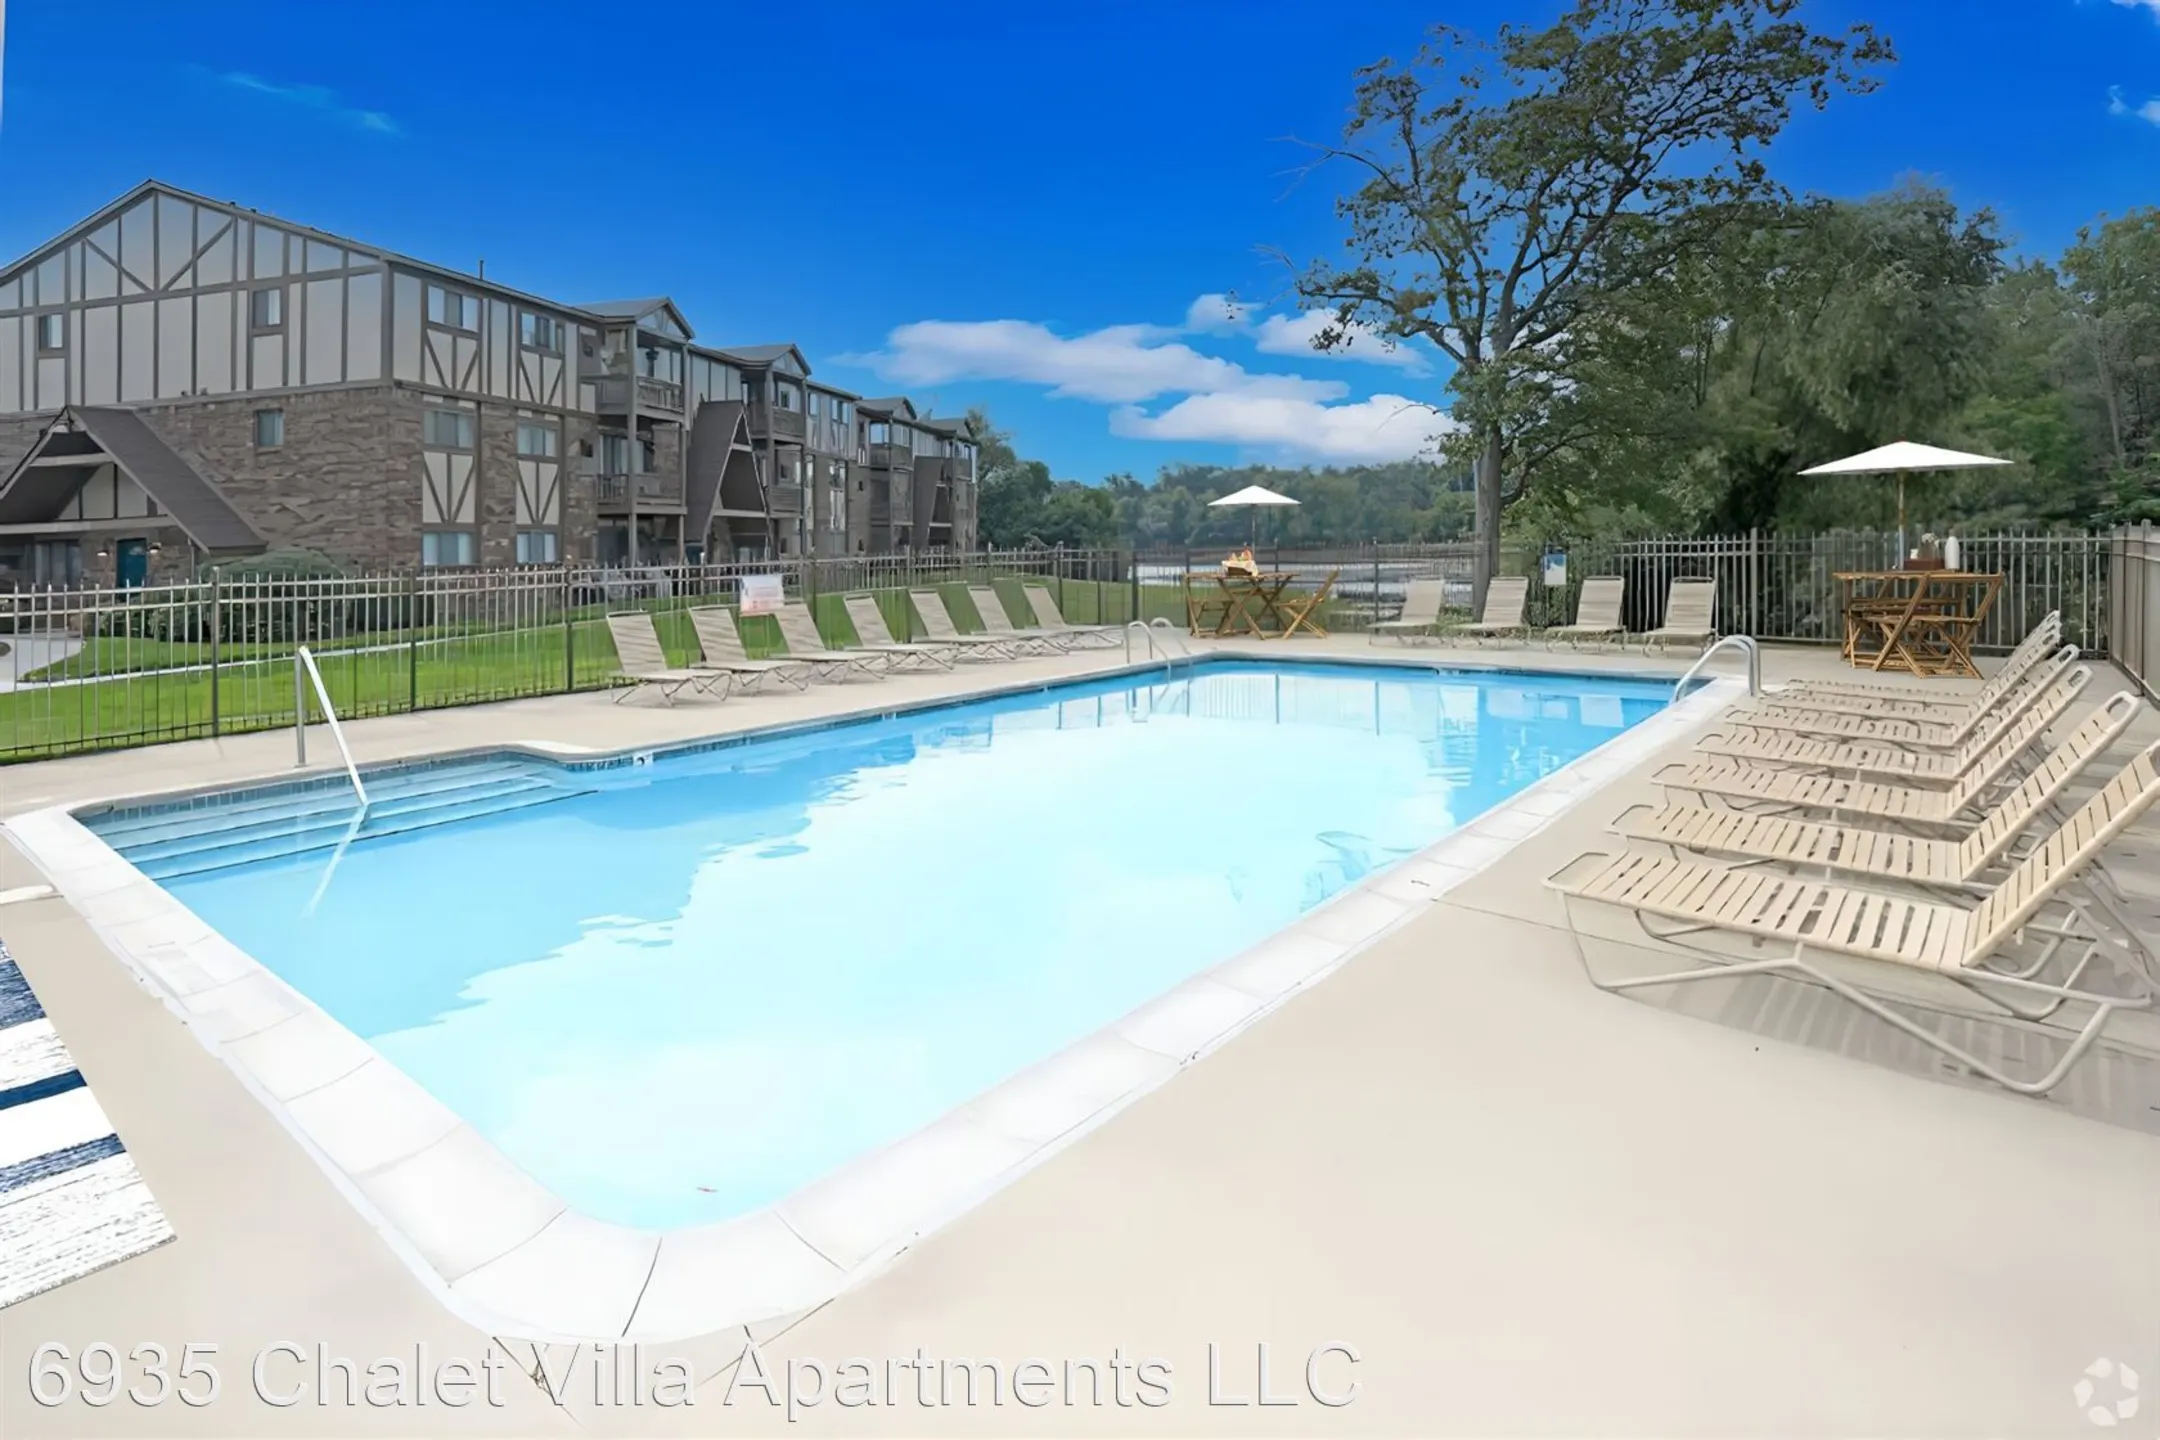 Pool - Chalet Villa Apartments - Clarkston, MI